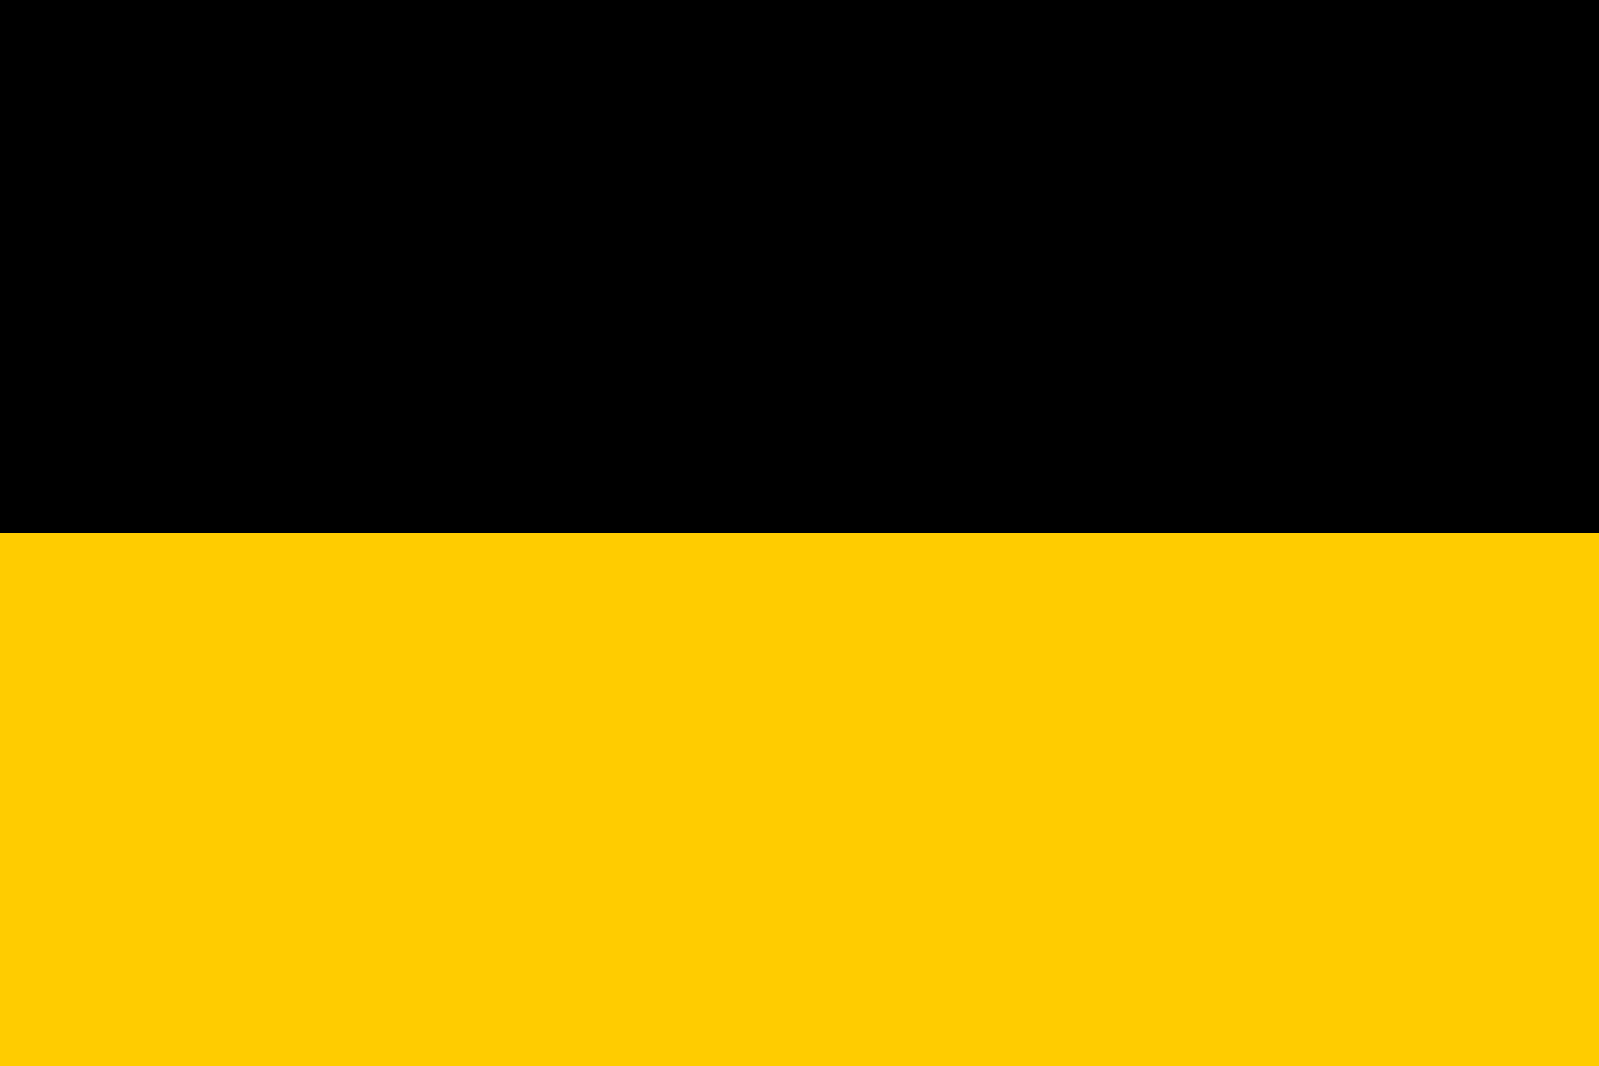 Playa bandera amarilla con raya negra